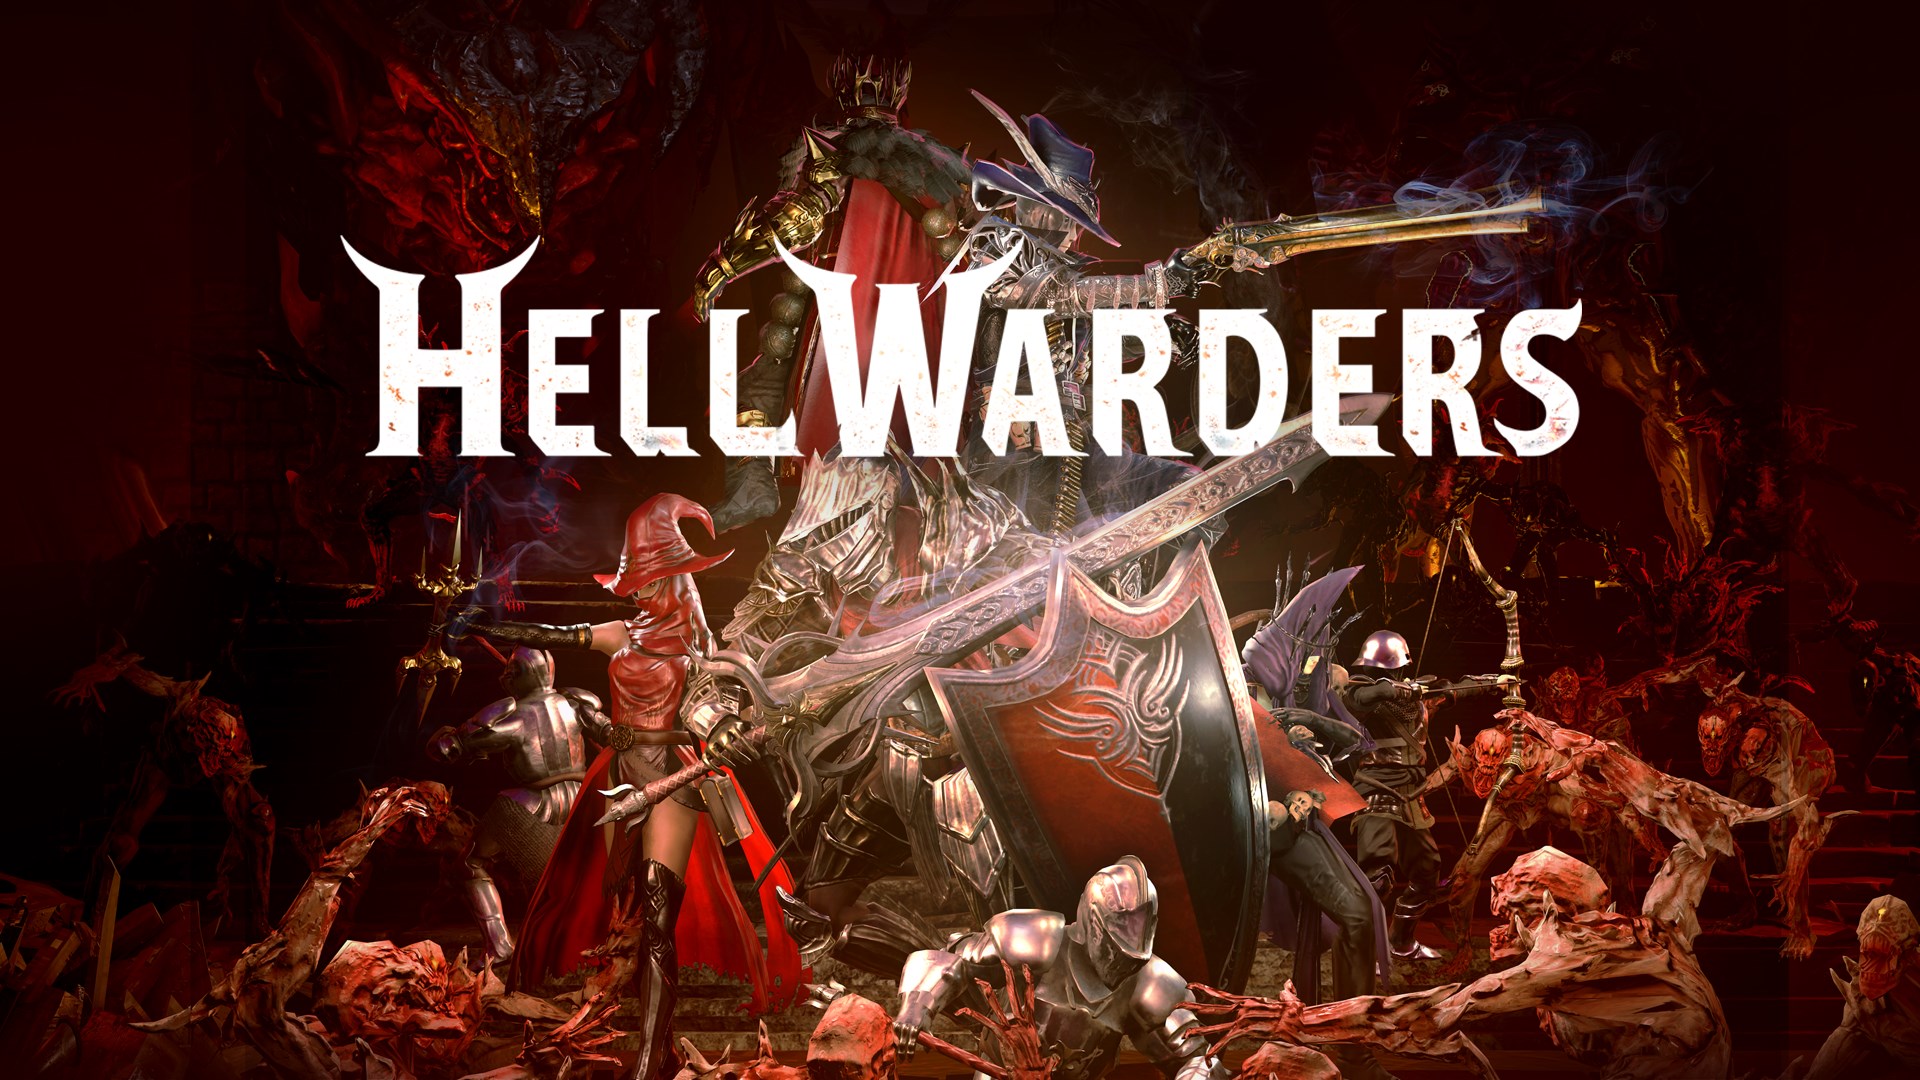 Hell Warders